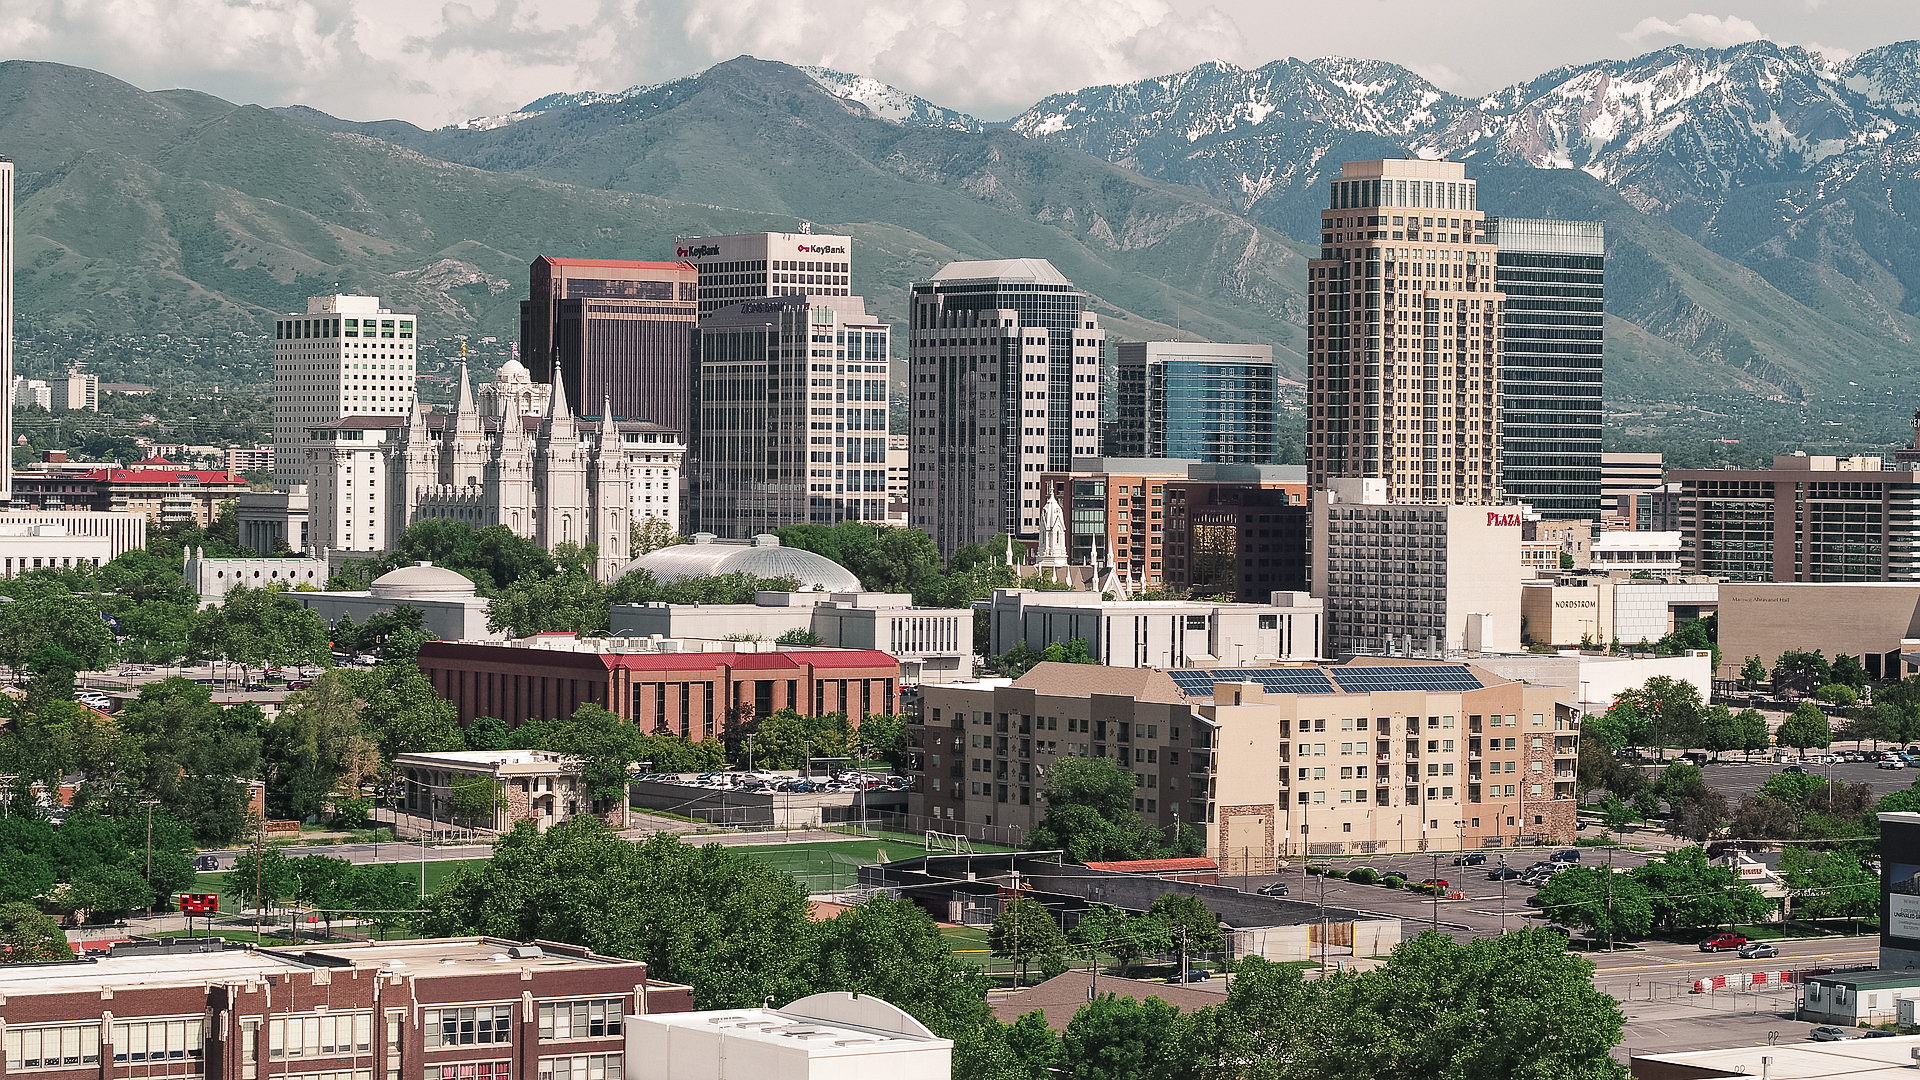 Salt Lake City, Utah, with stunning mountain vistas in the background